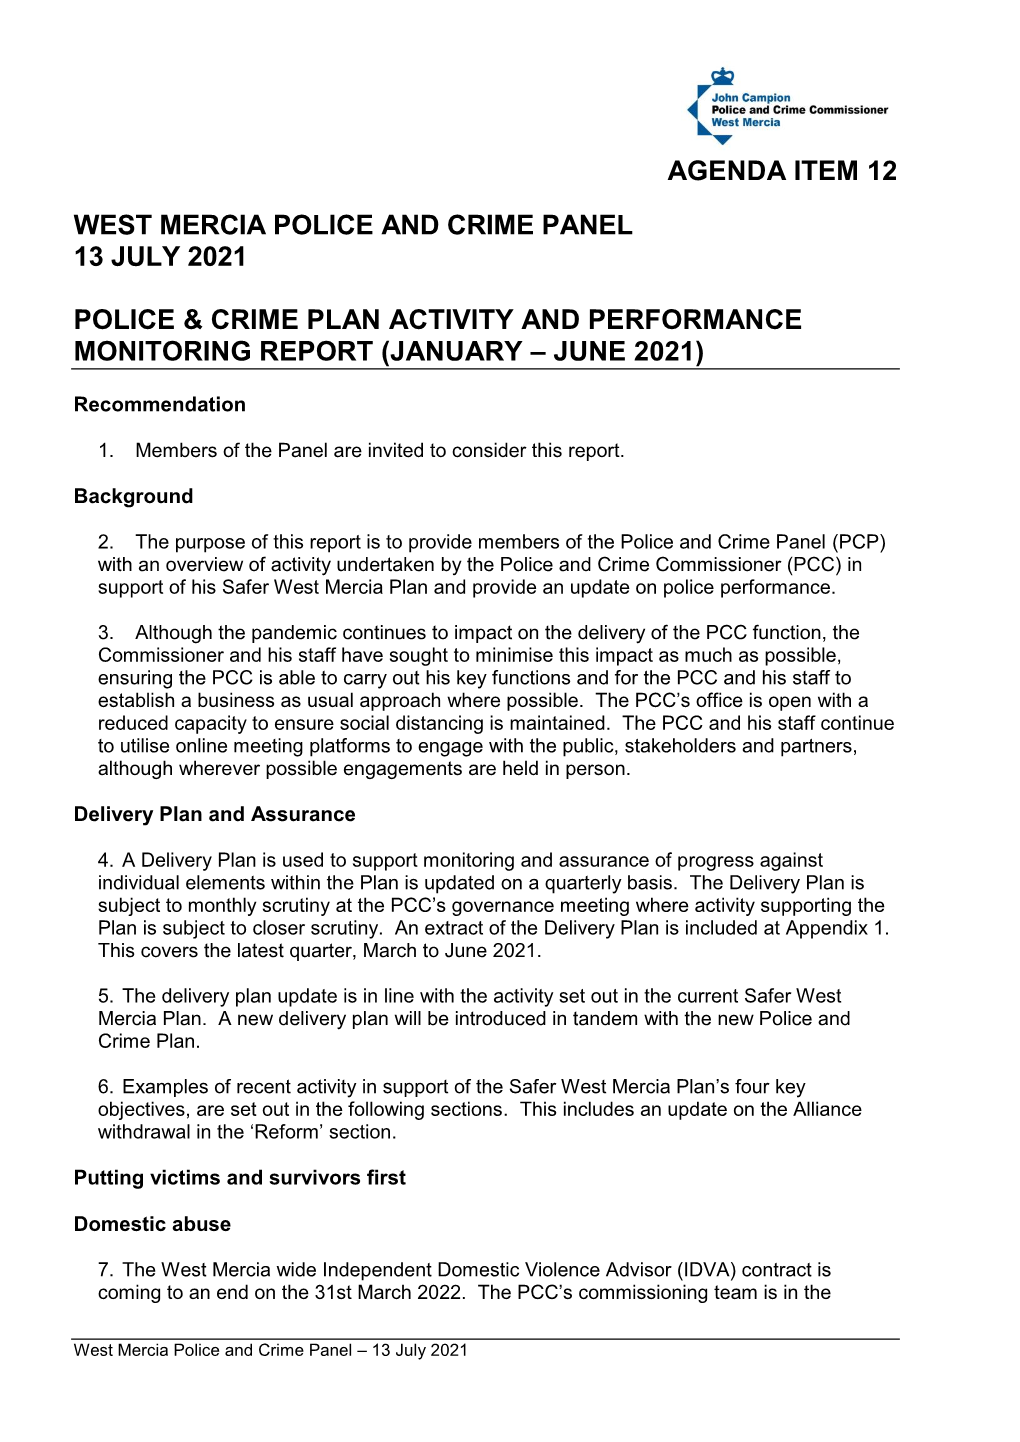 Agenda Item 12 West Mercia Police and Crime Panel 13